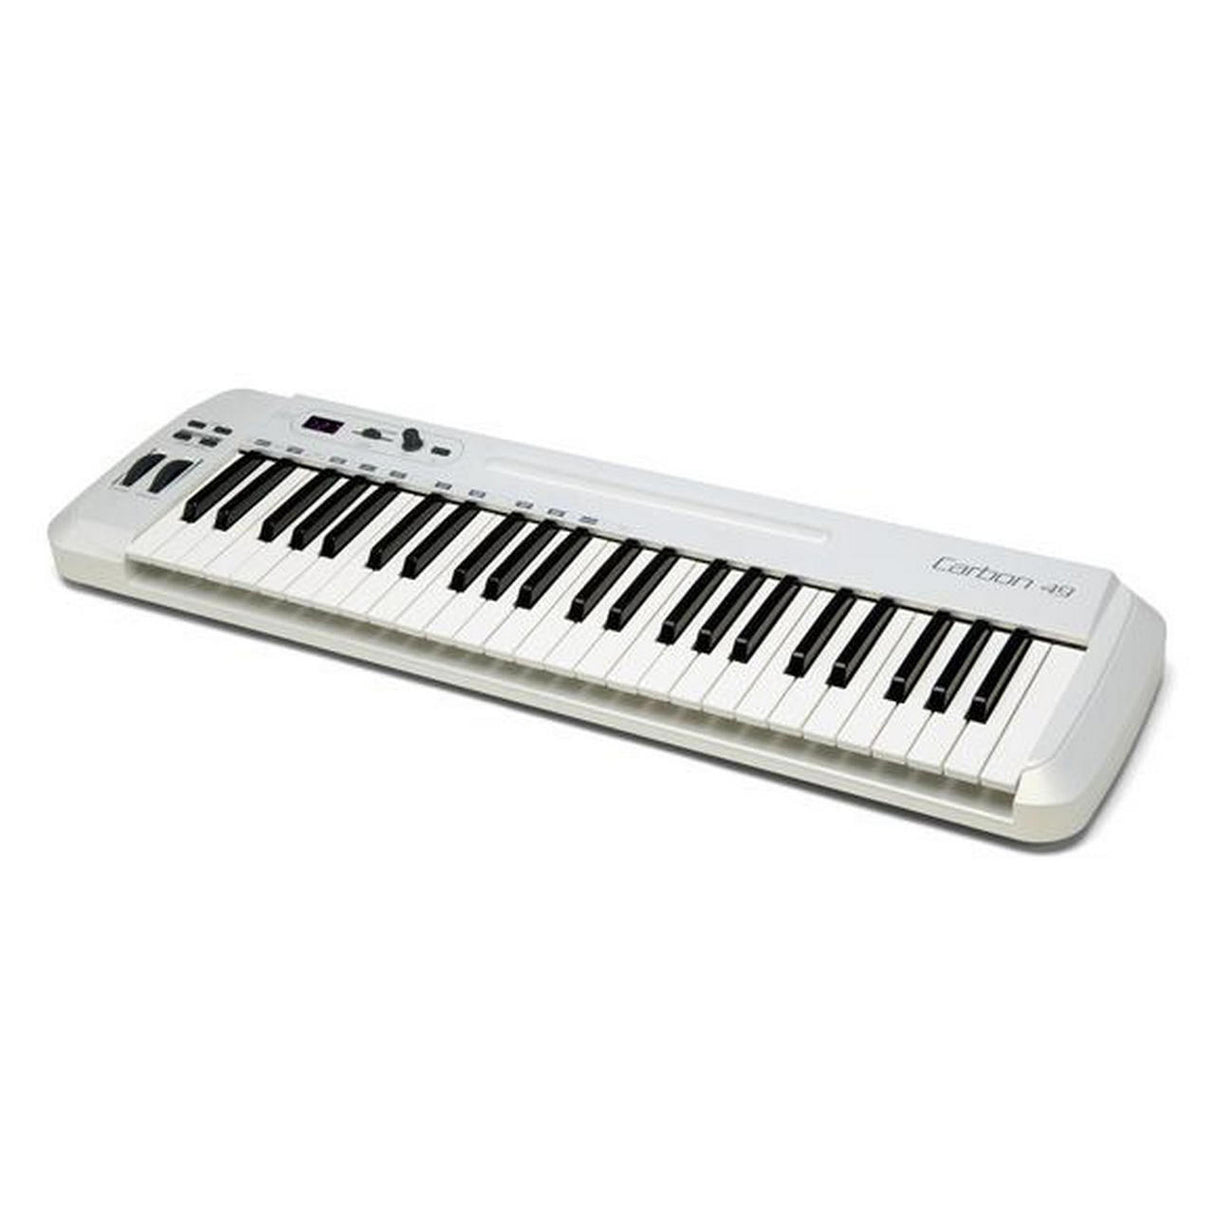 Samson Carbon 49 49 Keyboard USB MIDI Controller (Used)